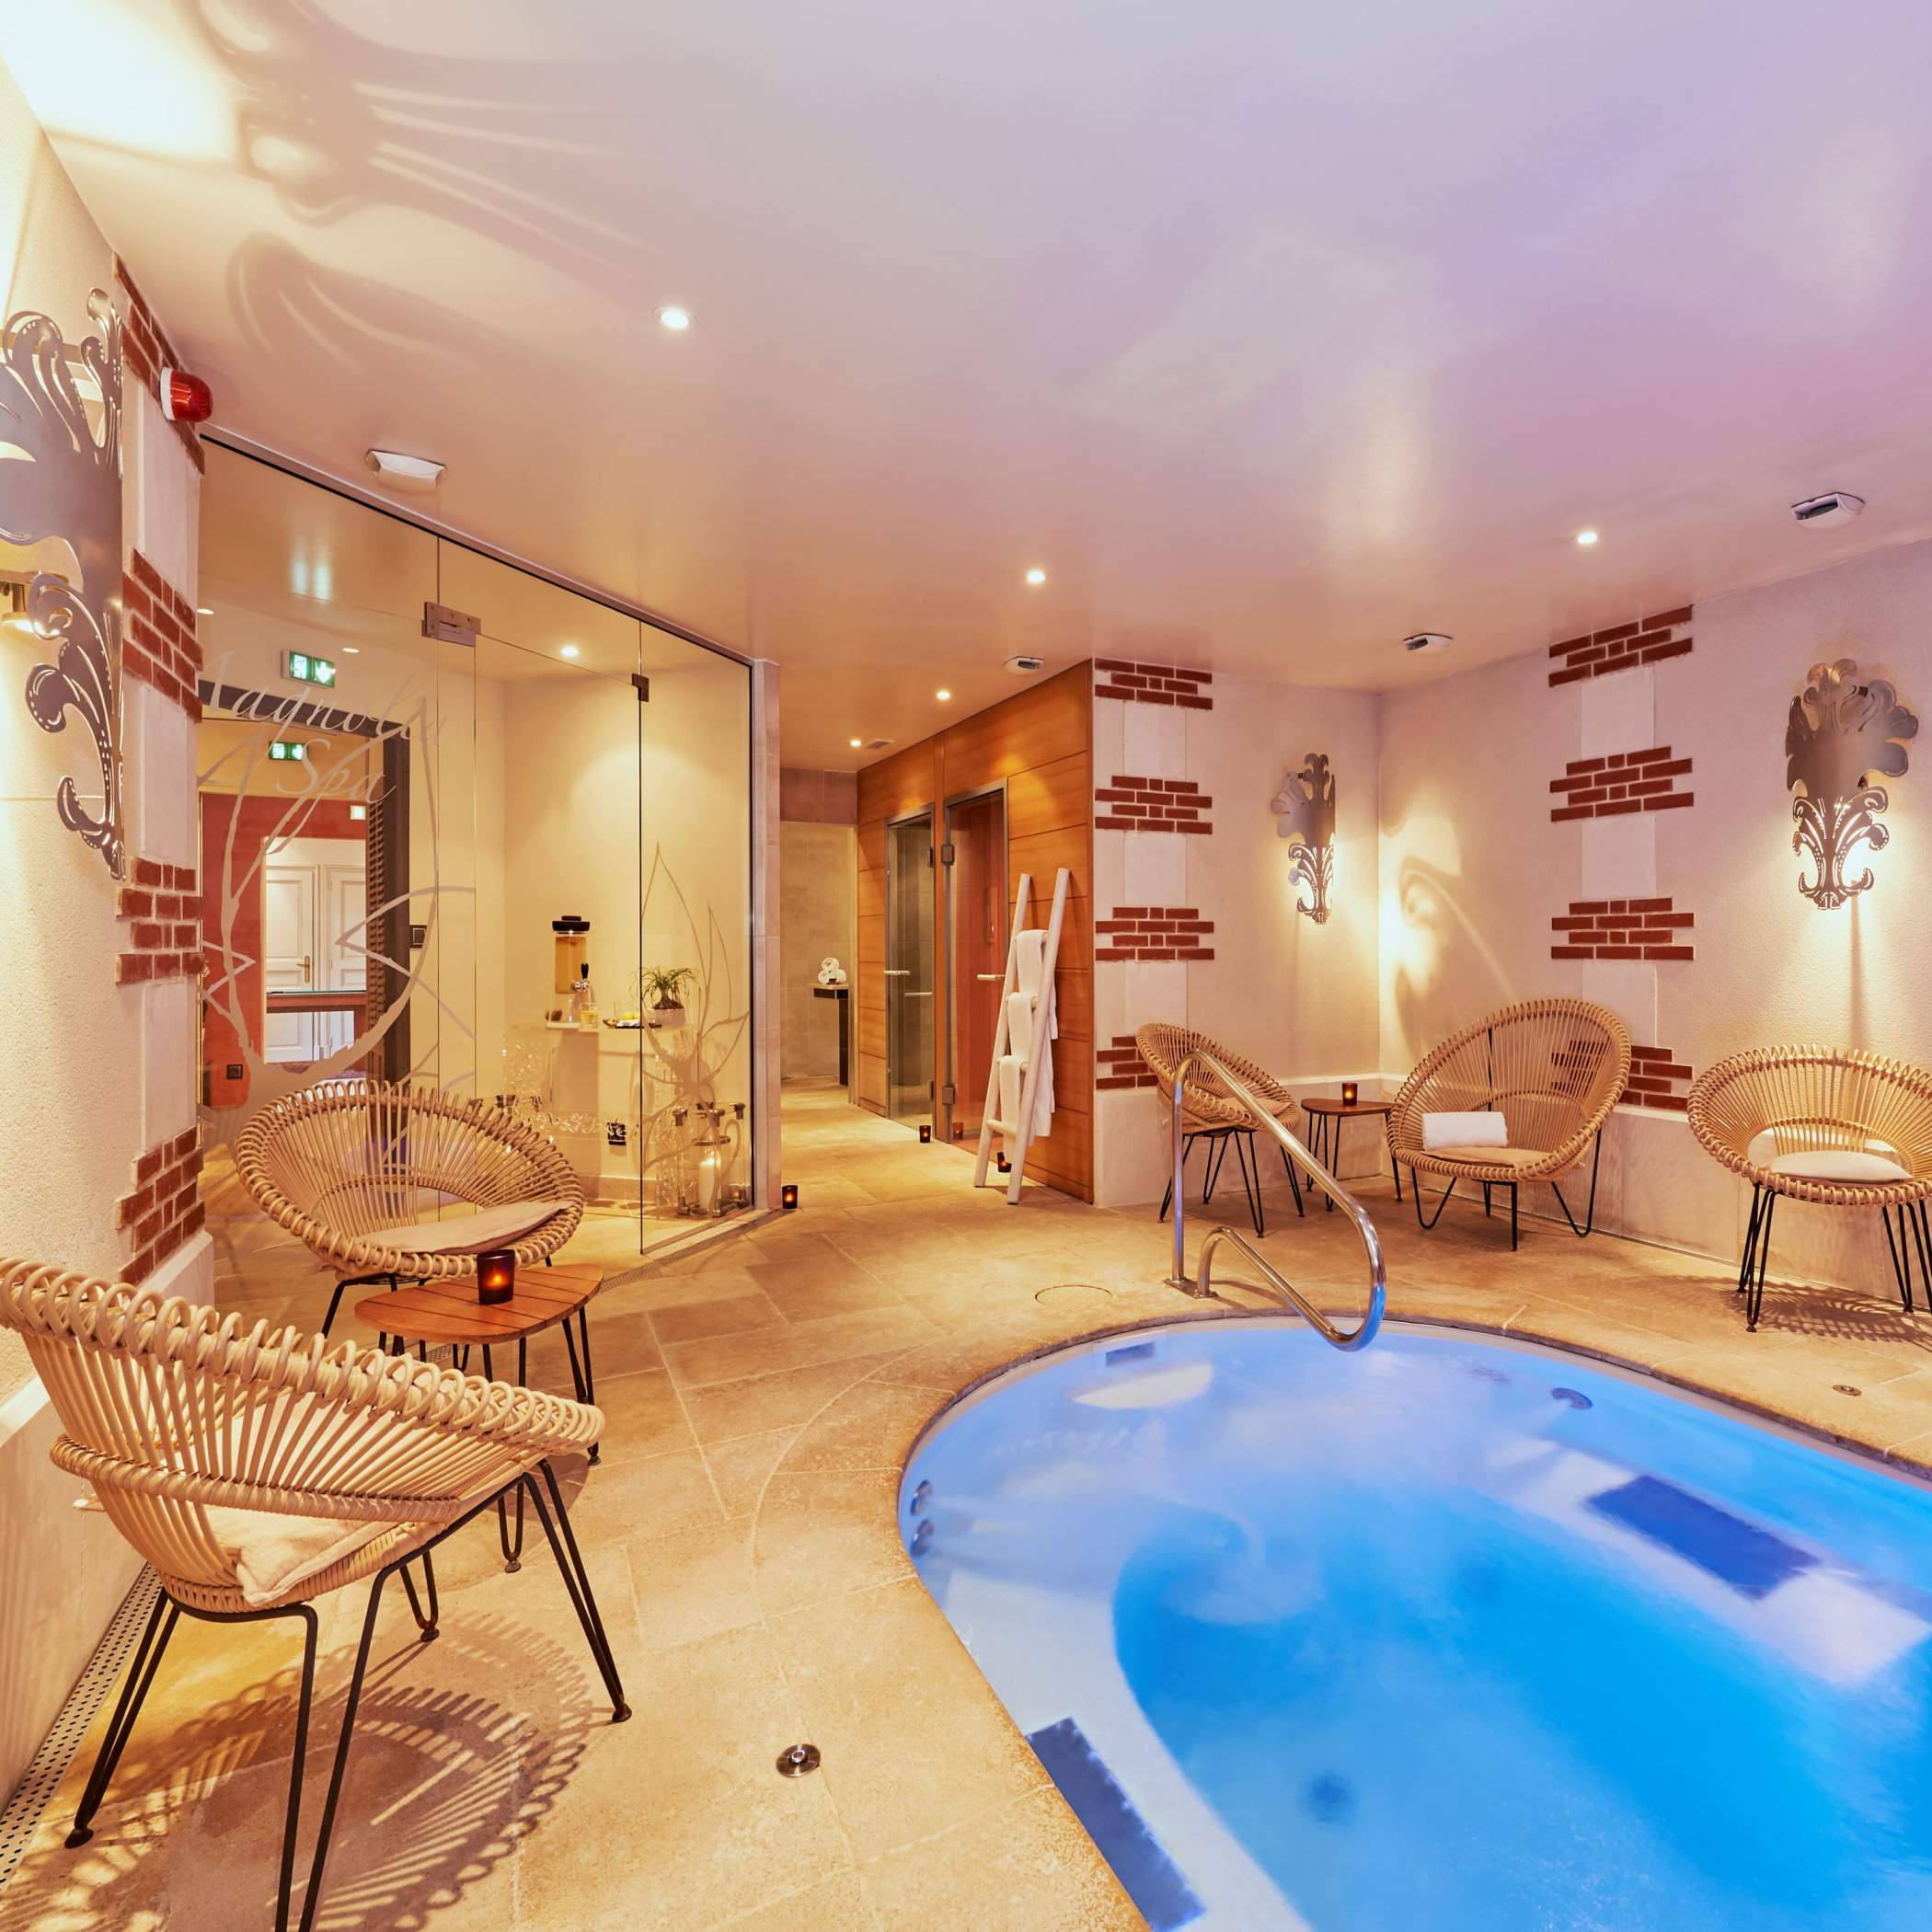 Indoor whirlpool bath at Château de Beaulieu, Spa Hotel in Touraine